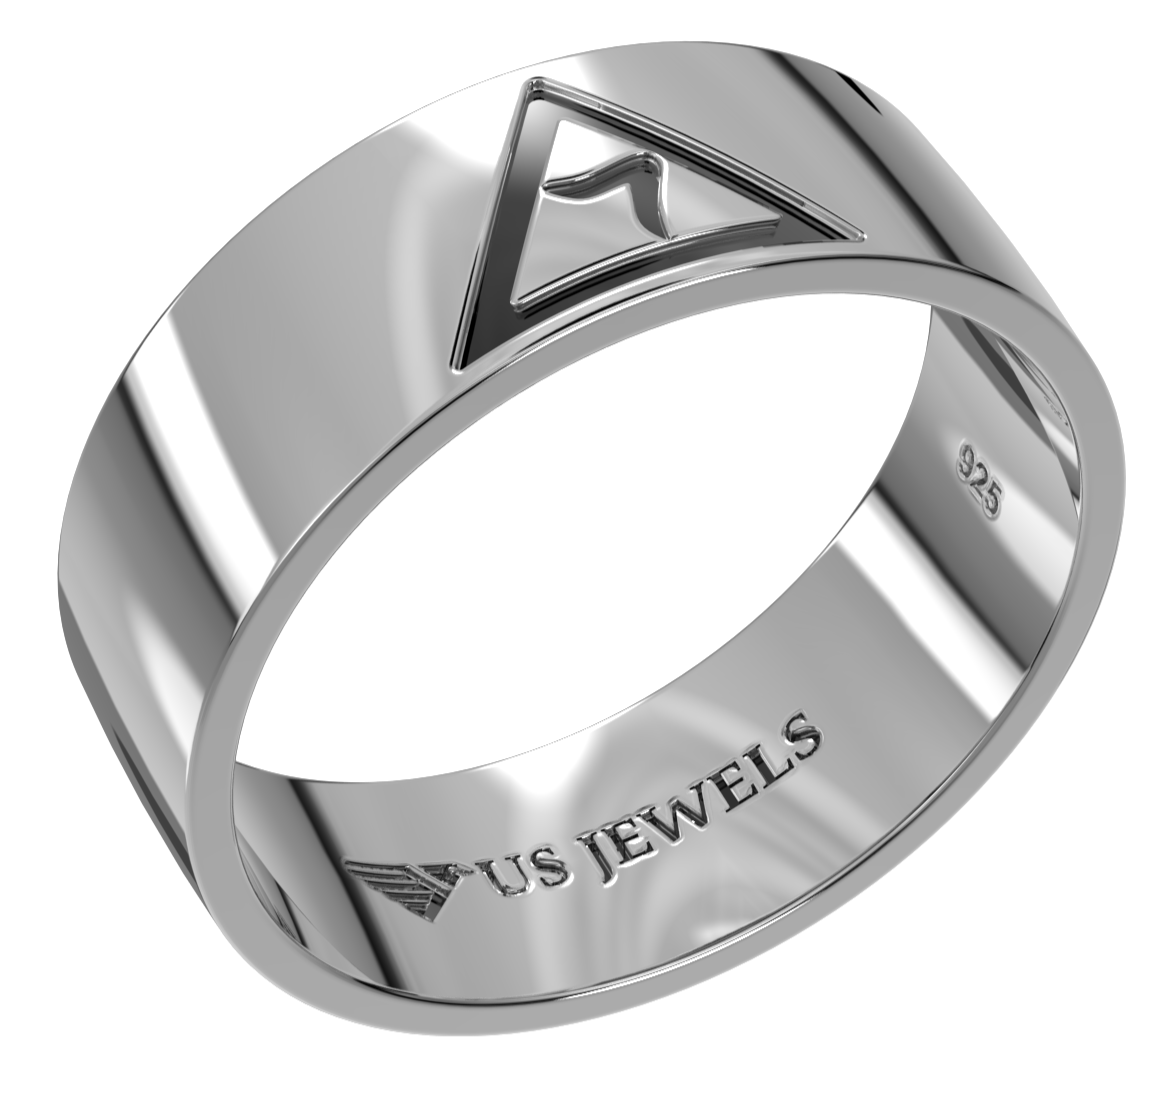 Customizable 925 Sterling Silver Scottish Rite 14th Degree Yod Masonic Ring